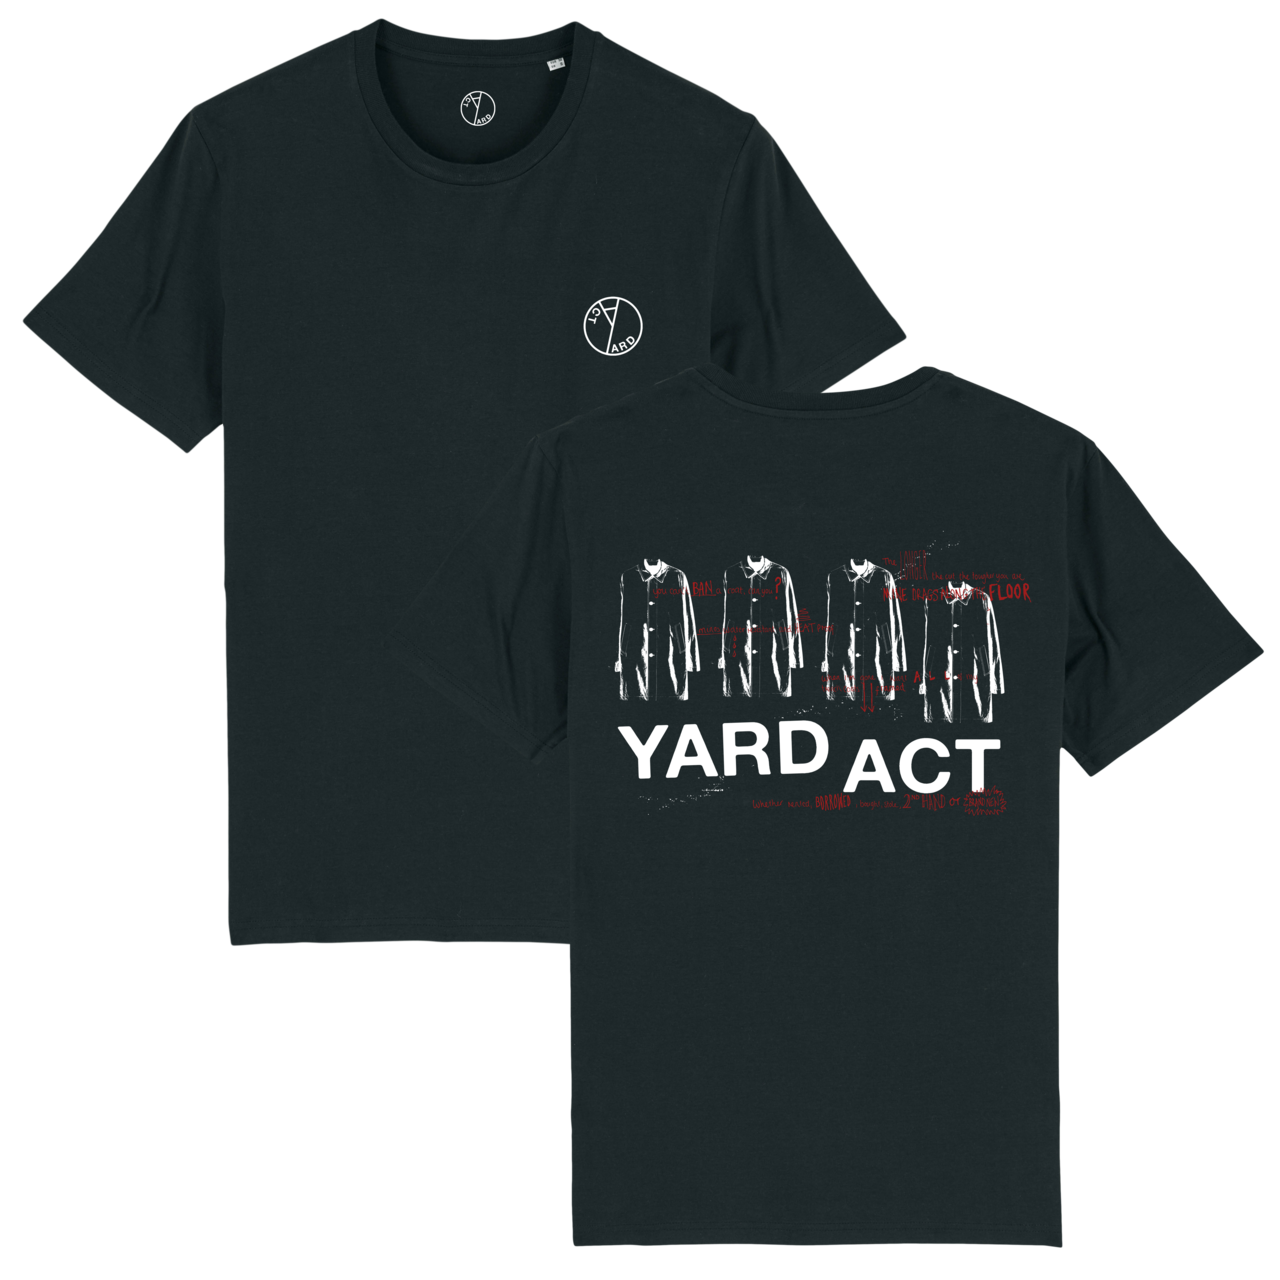 Yard Act - Trench Coat Black T-shirt